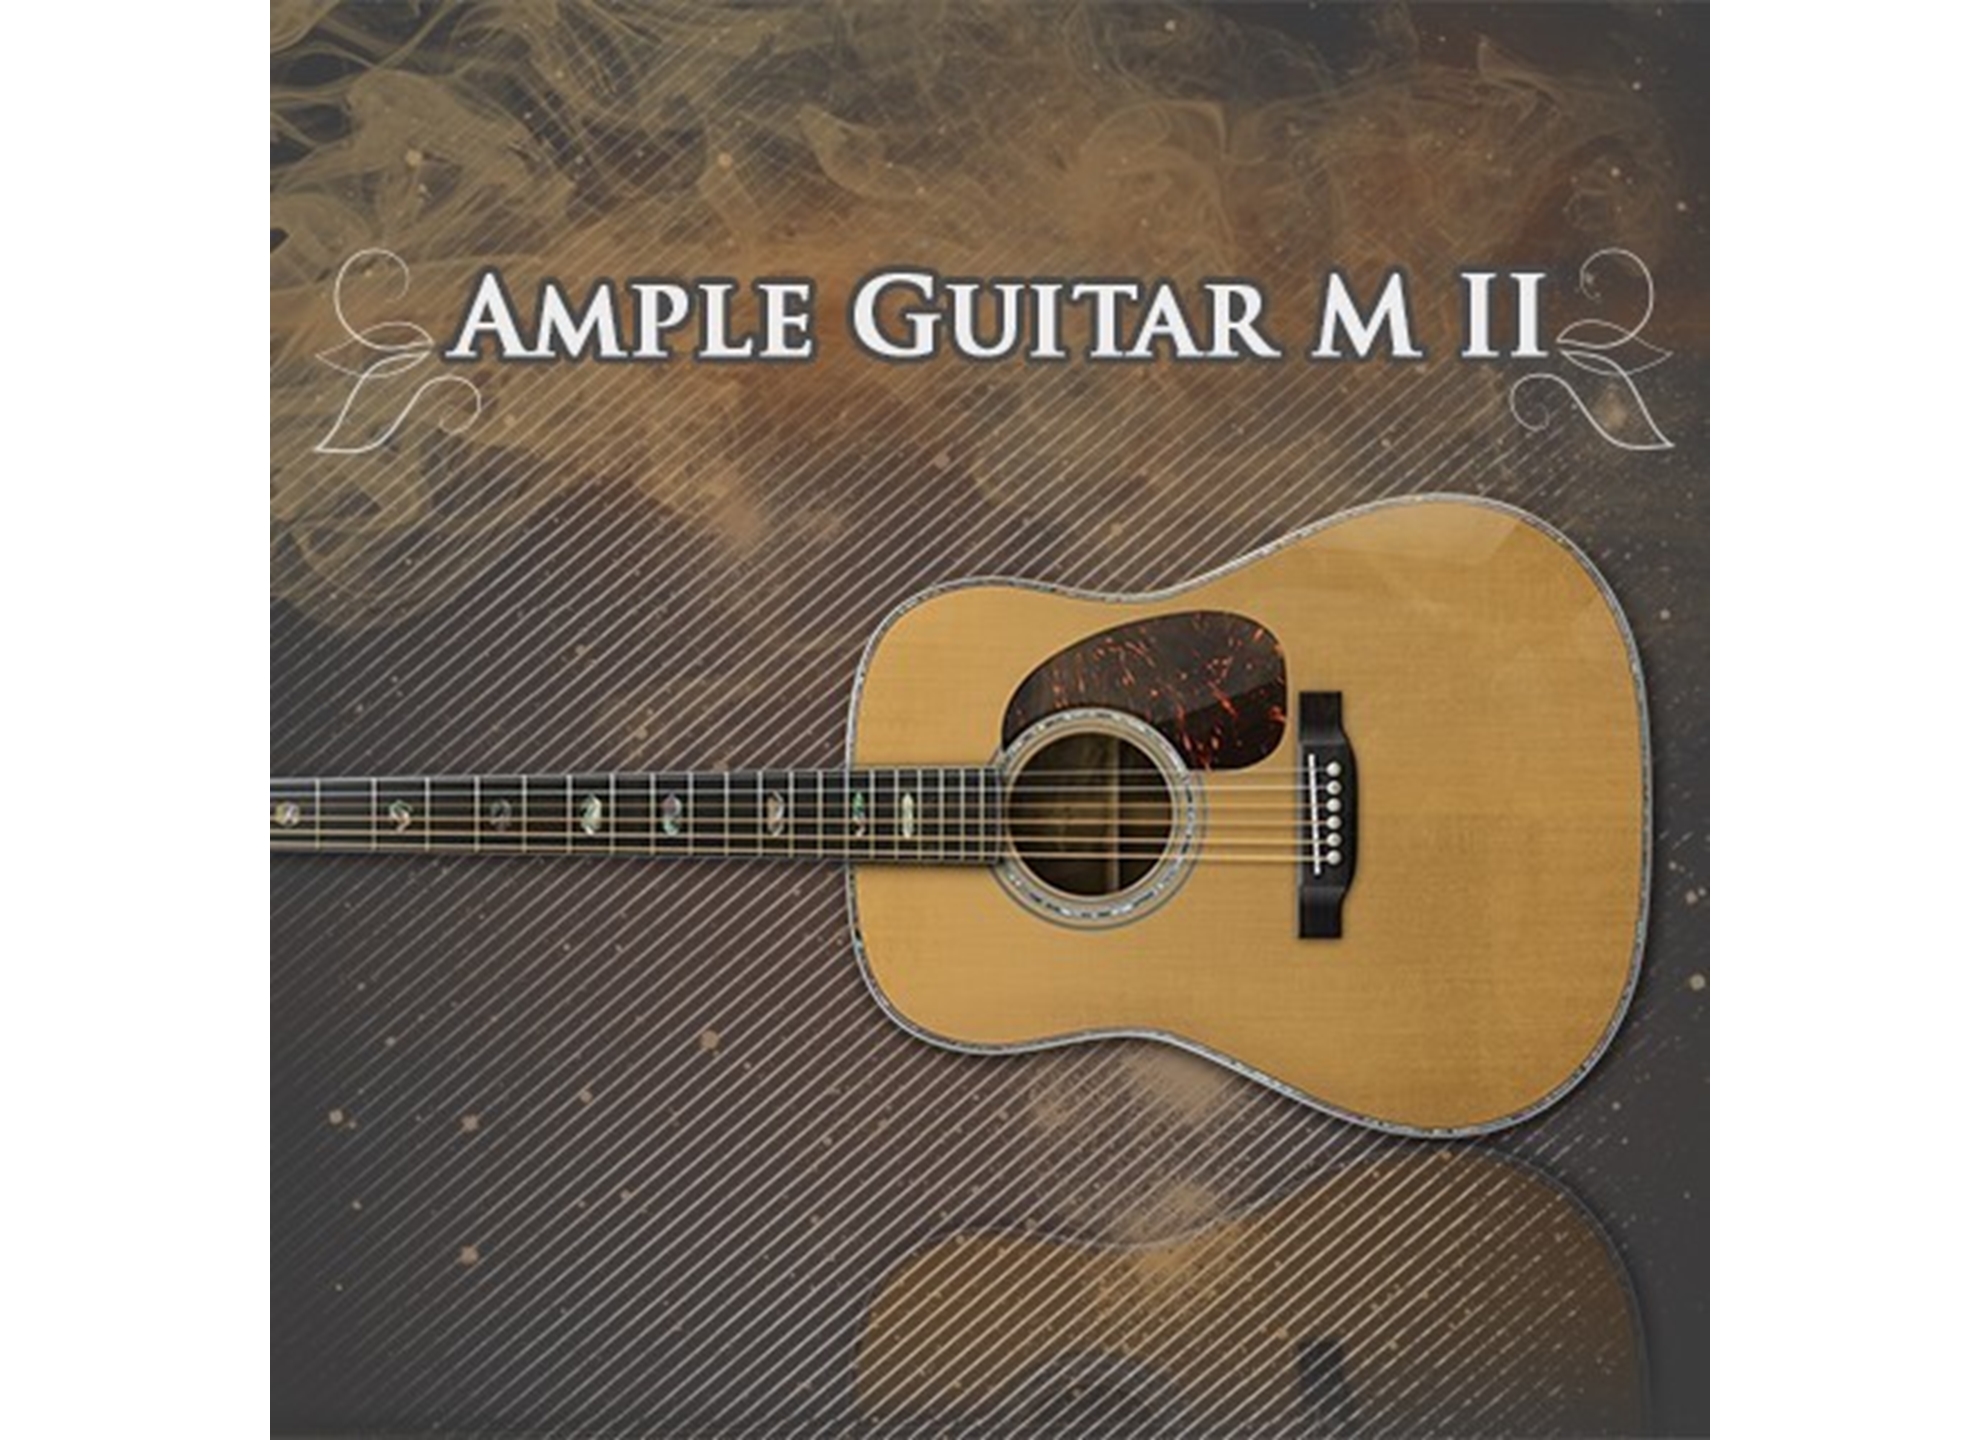 Ample Guitar M III